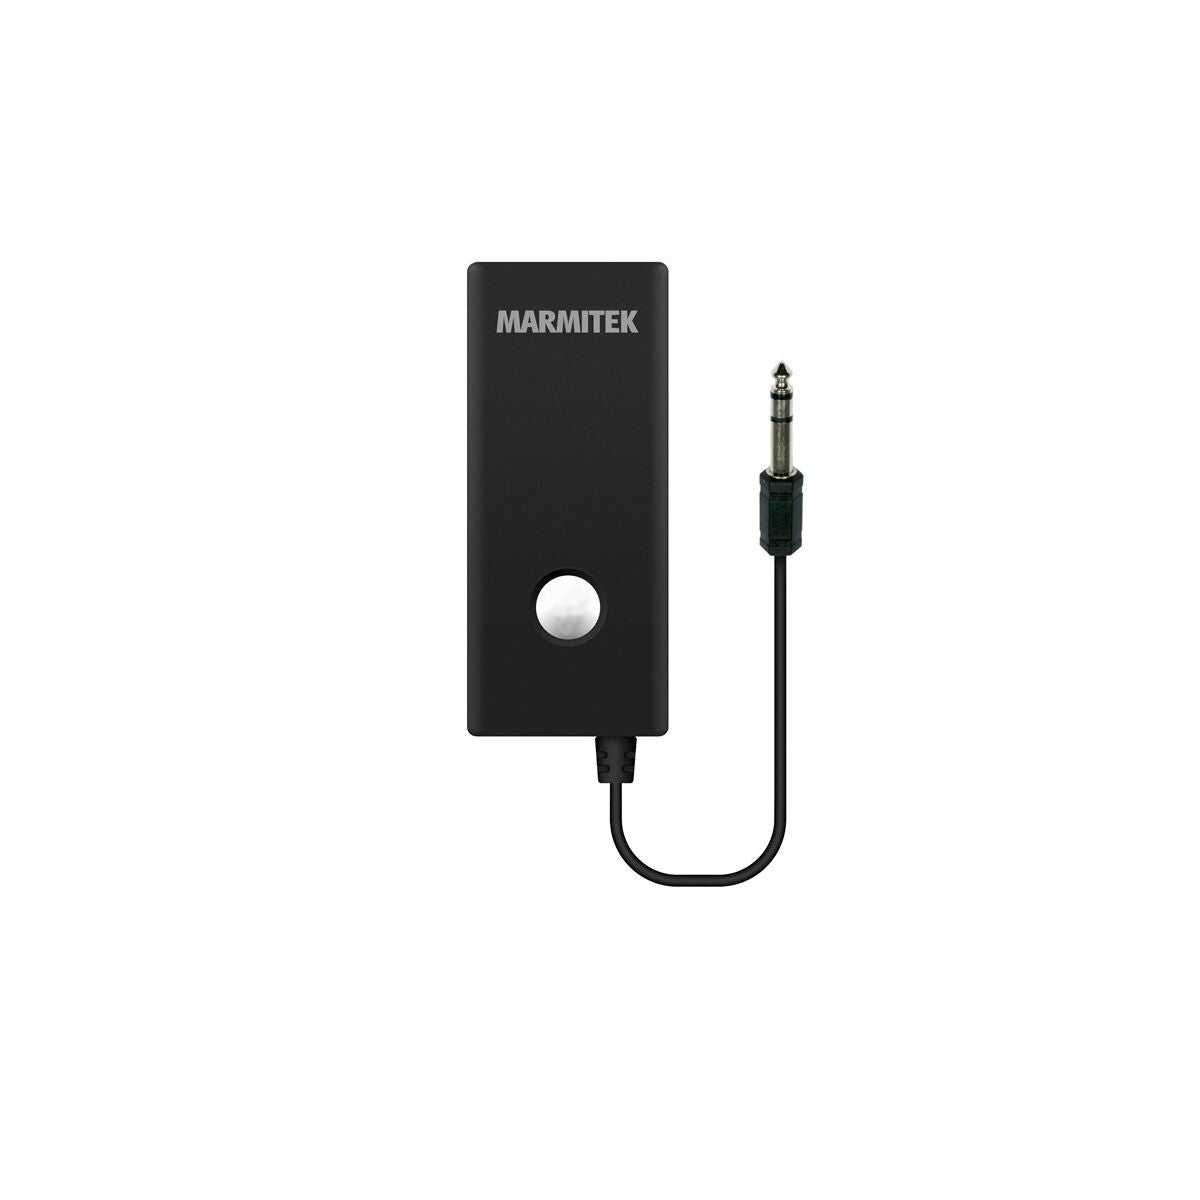 BoomBoom 75 - Bluetooth Receiver - Product Image | Marmitek